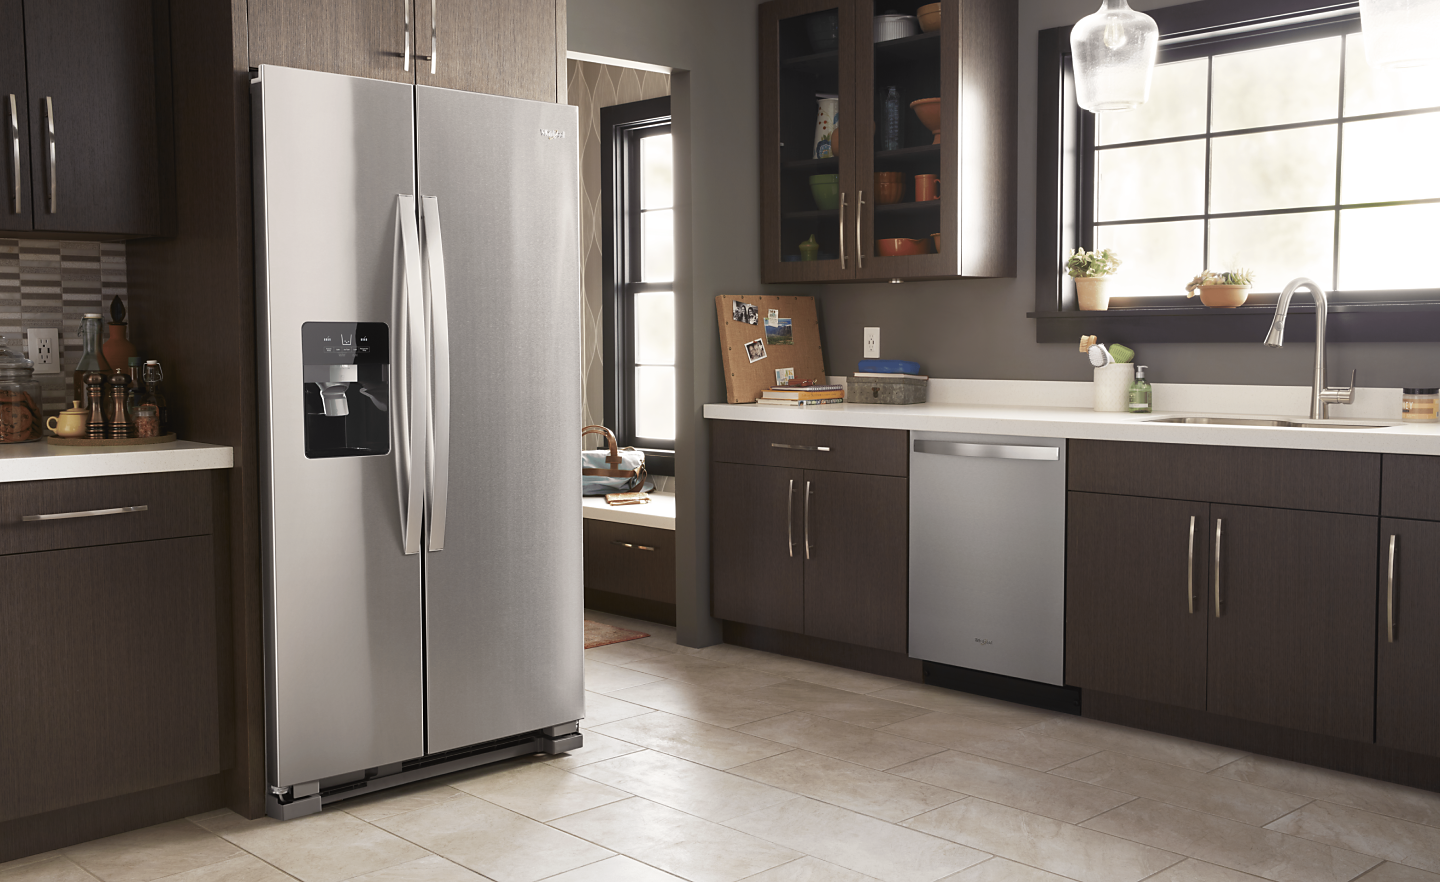 LargeCapacity Refrigerators Whirlpool